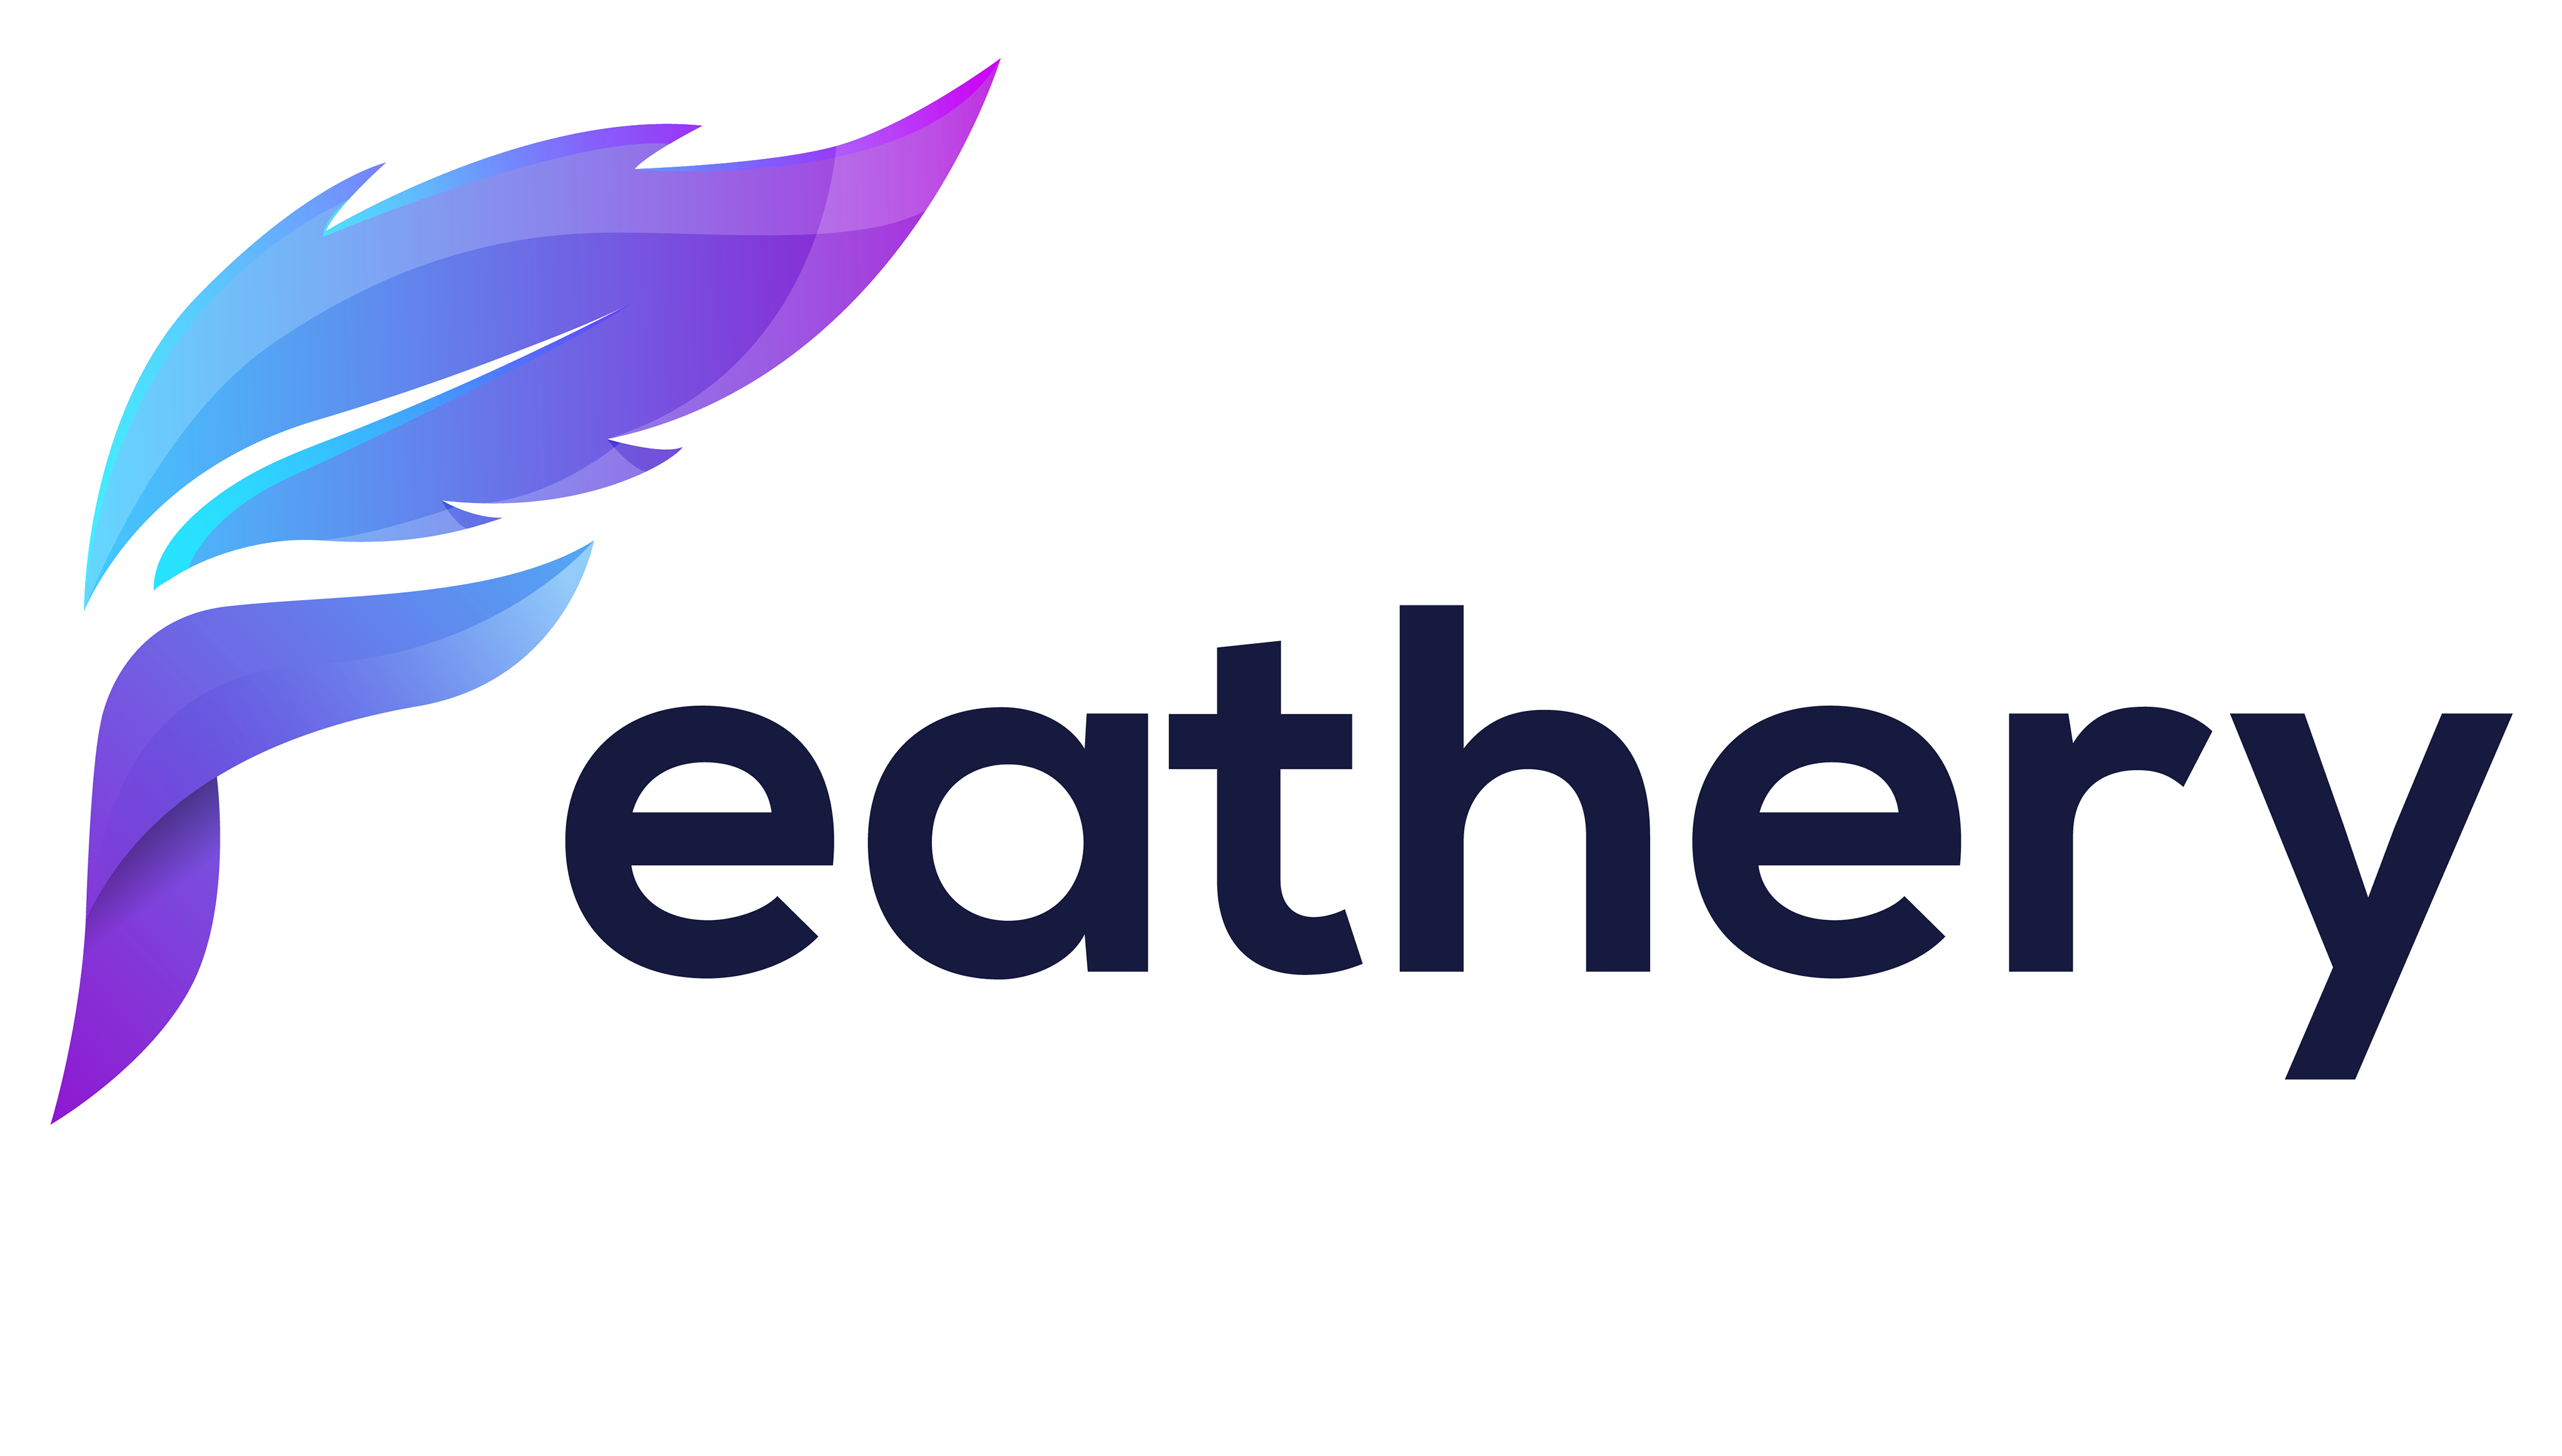 Feathery Design logo